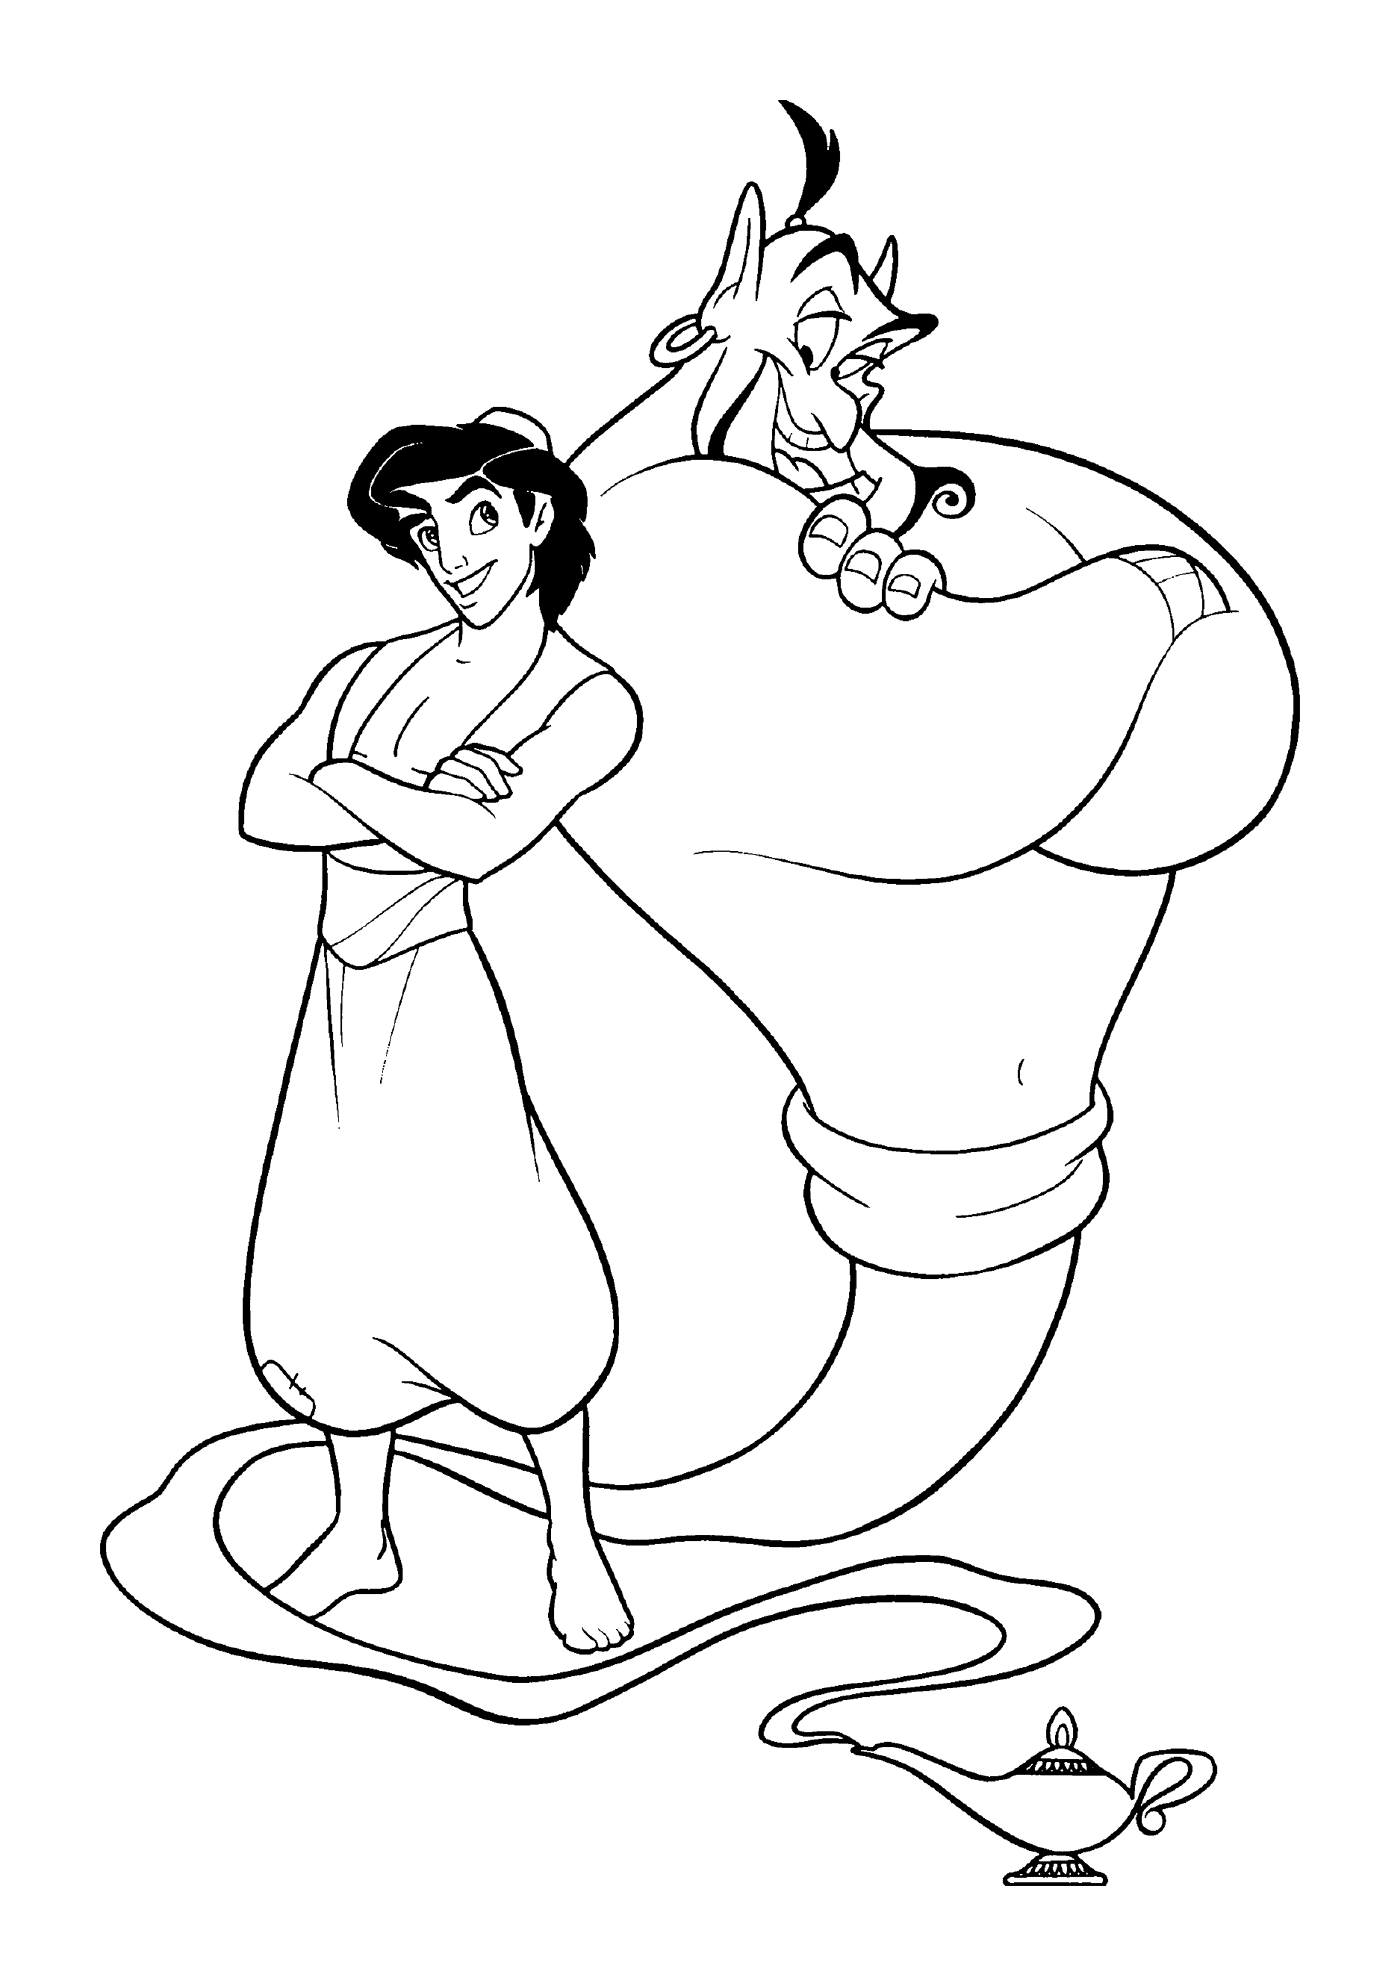 Aladdin et le Genie